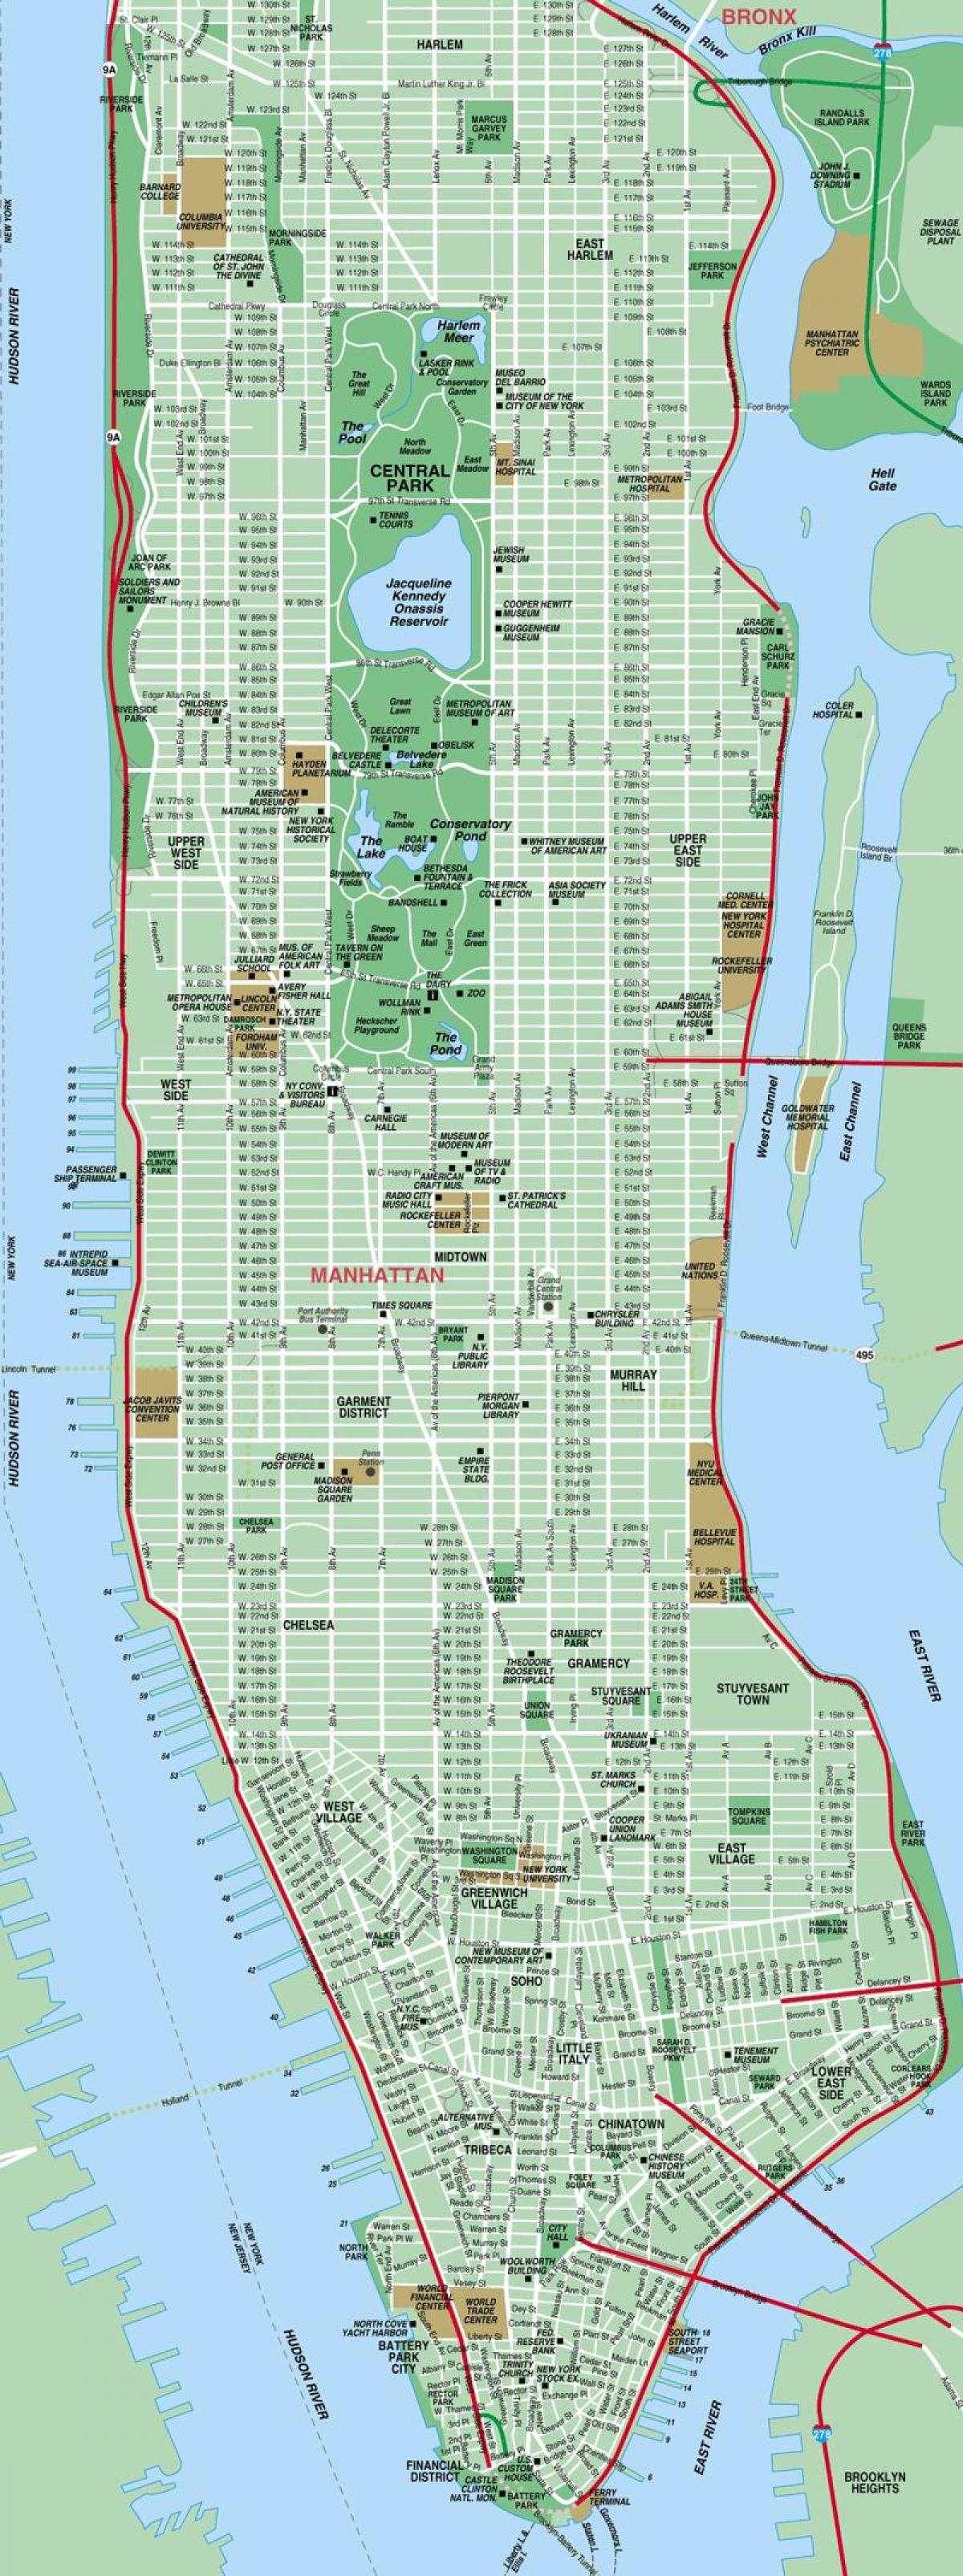 Manhattan street map xehetasun handiko